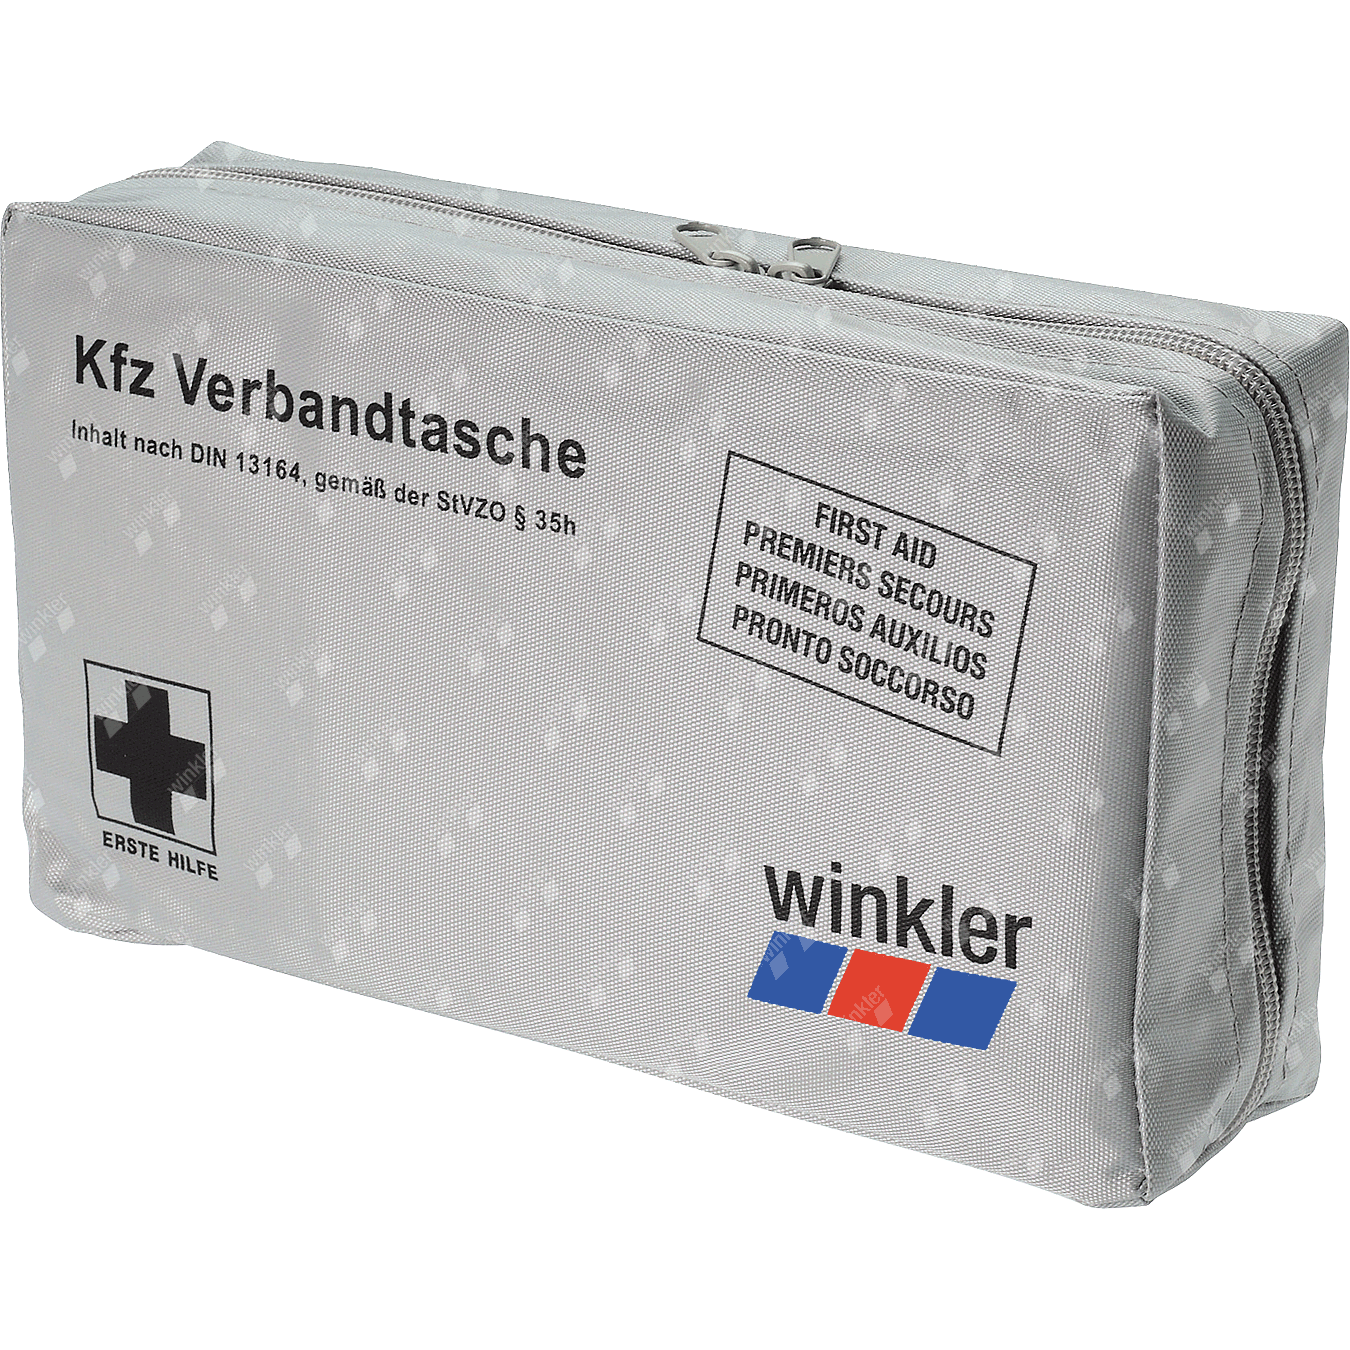 First aid bag, DIN 13164, gray, nylon - winkler shop